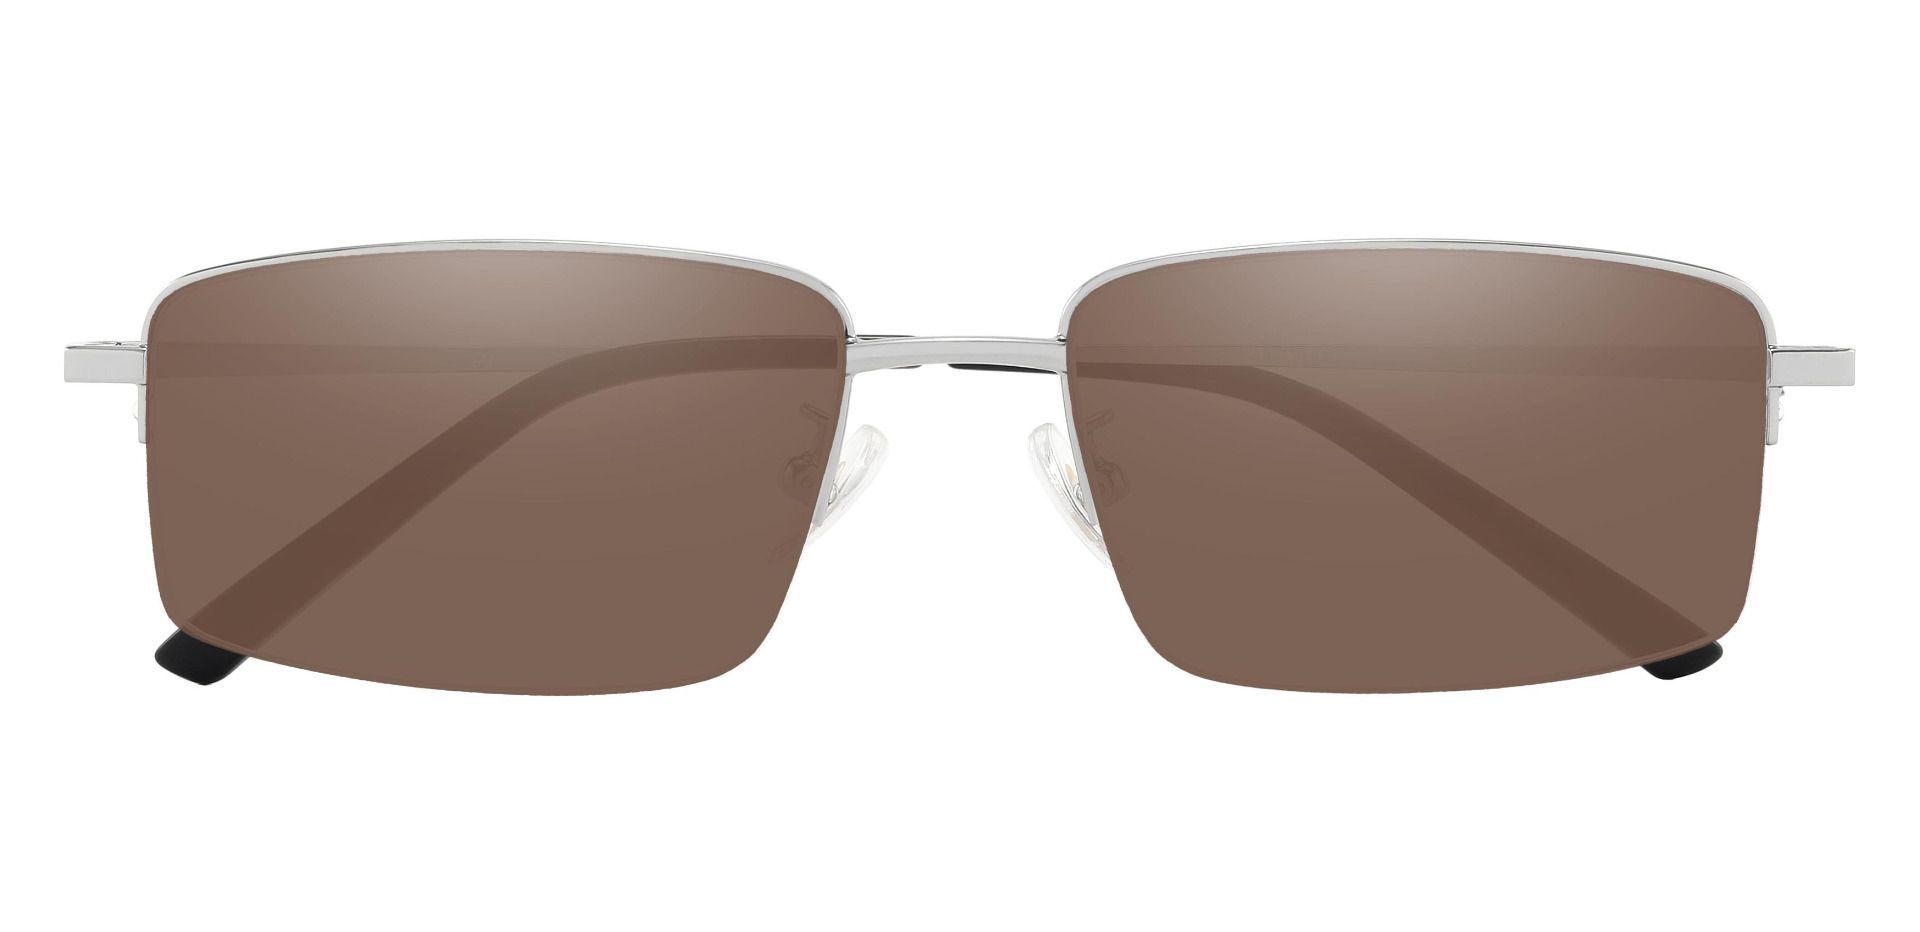 Wayne Rectangle Prescription Sunglasses - Silver Frame With Brown Lenses